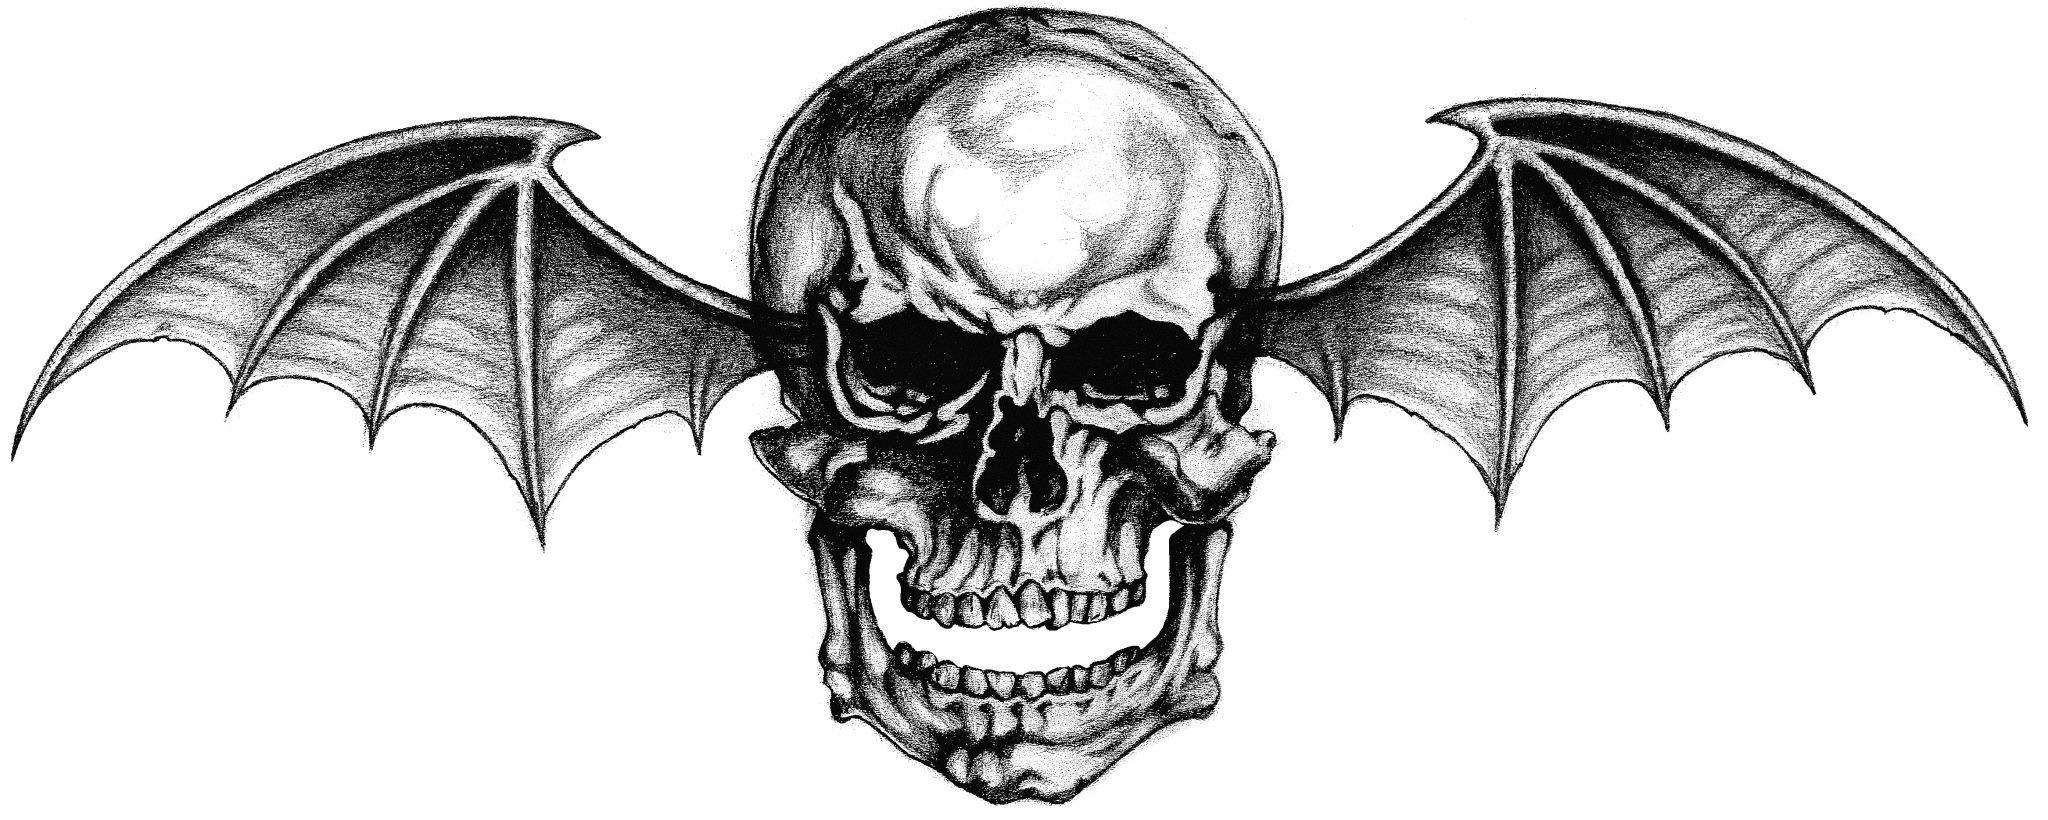 Rev Death Bat Logo - Avenged Sevenfold deathbat logo | For the soul | Tattoos, Avenged ...